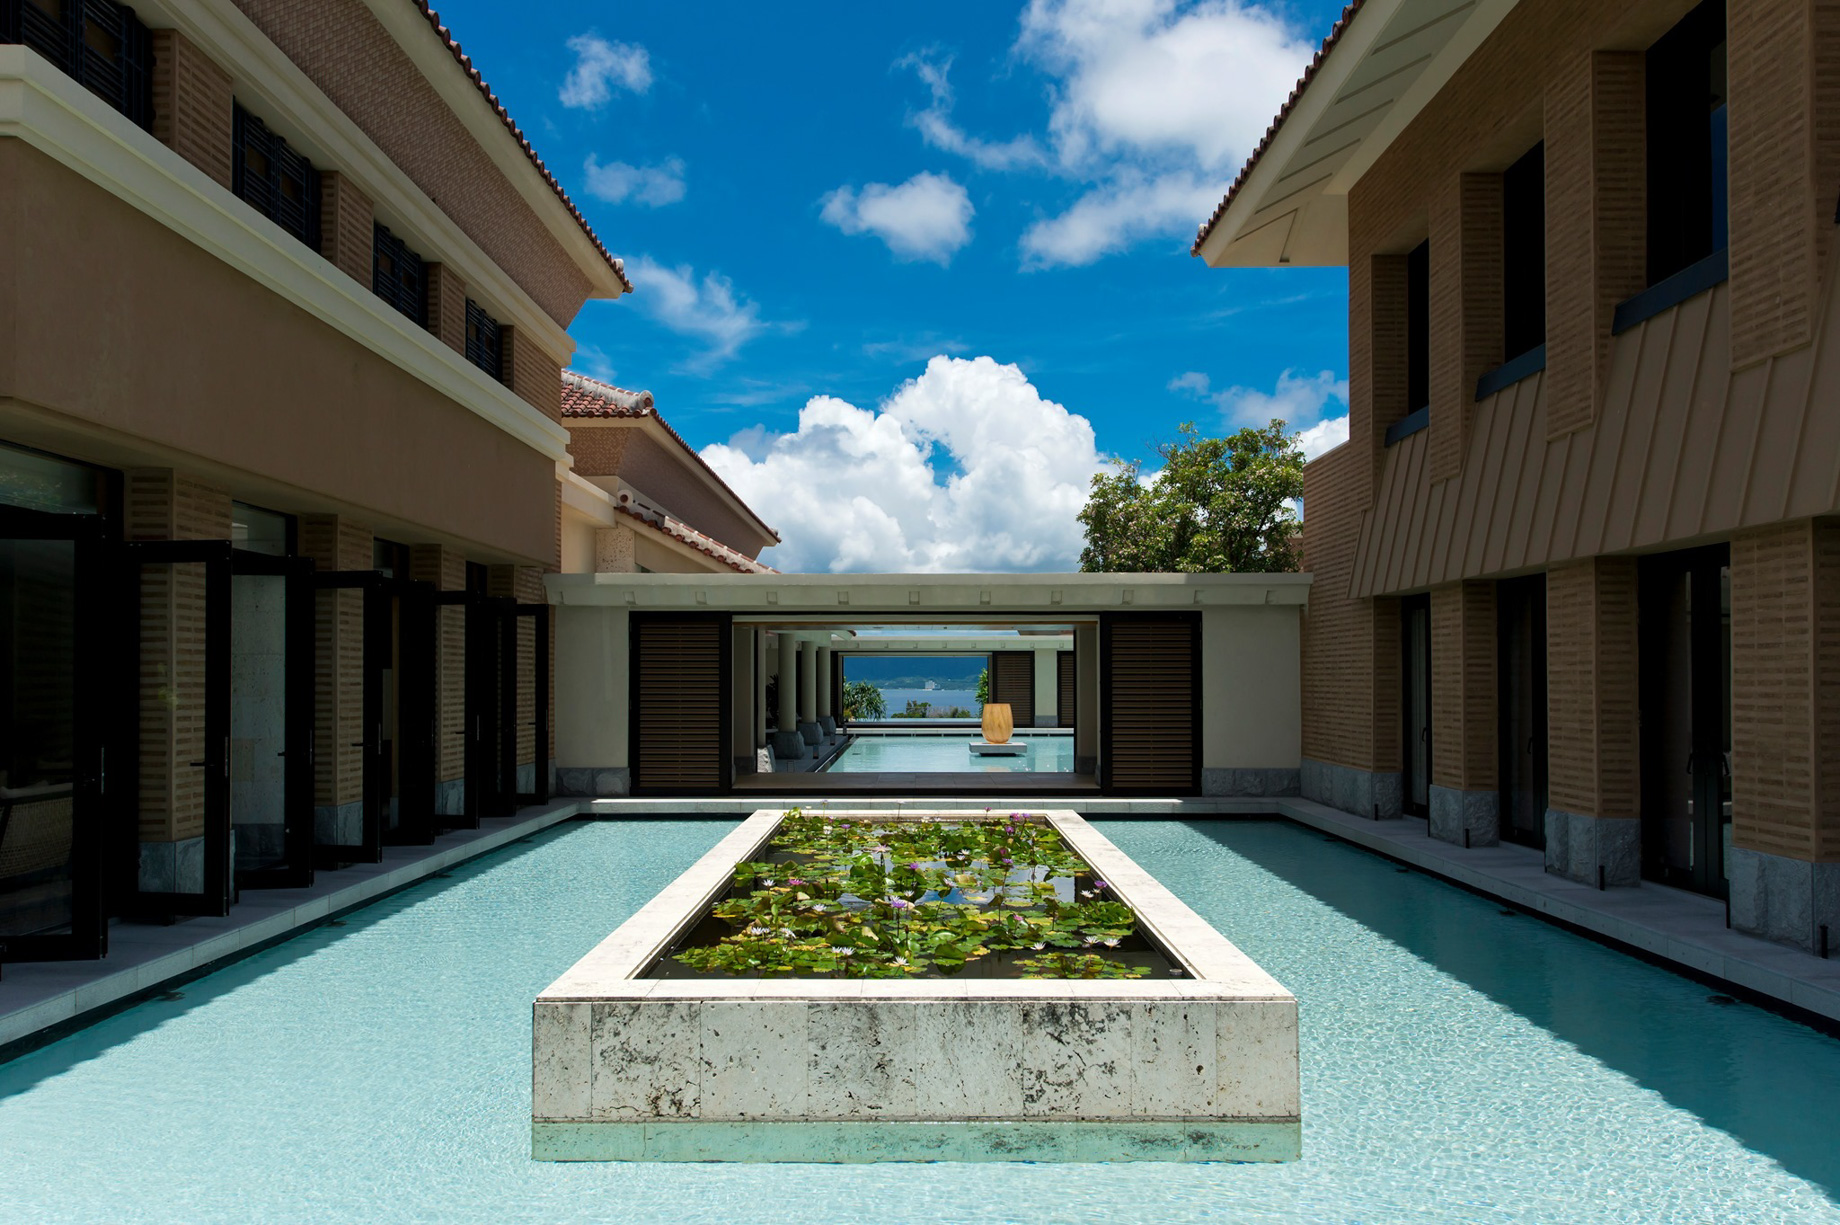 The Ritz-Carlton, Okinawa Hotel - Okinawa, Japan - Exterior Courtyard